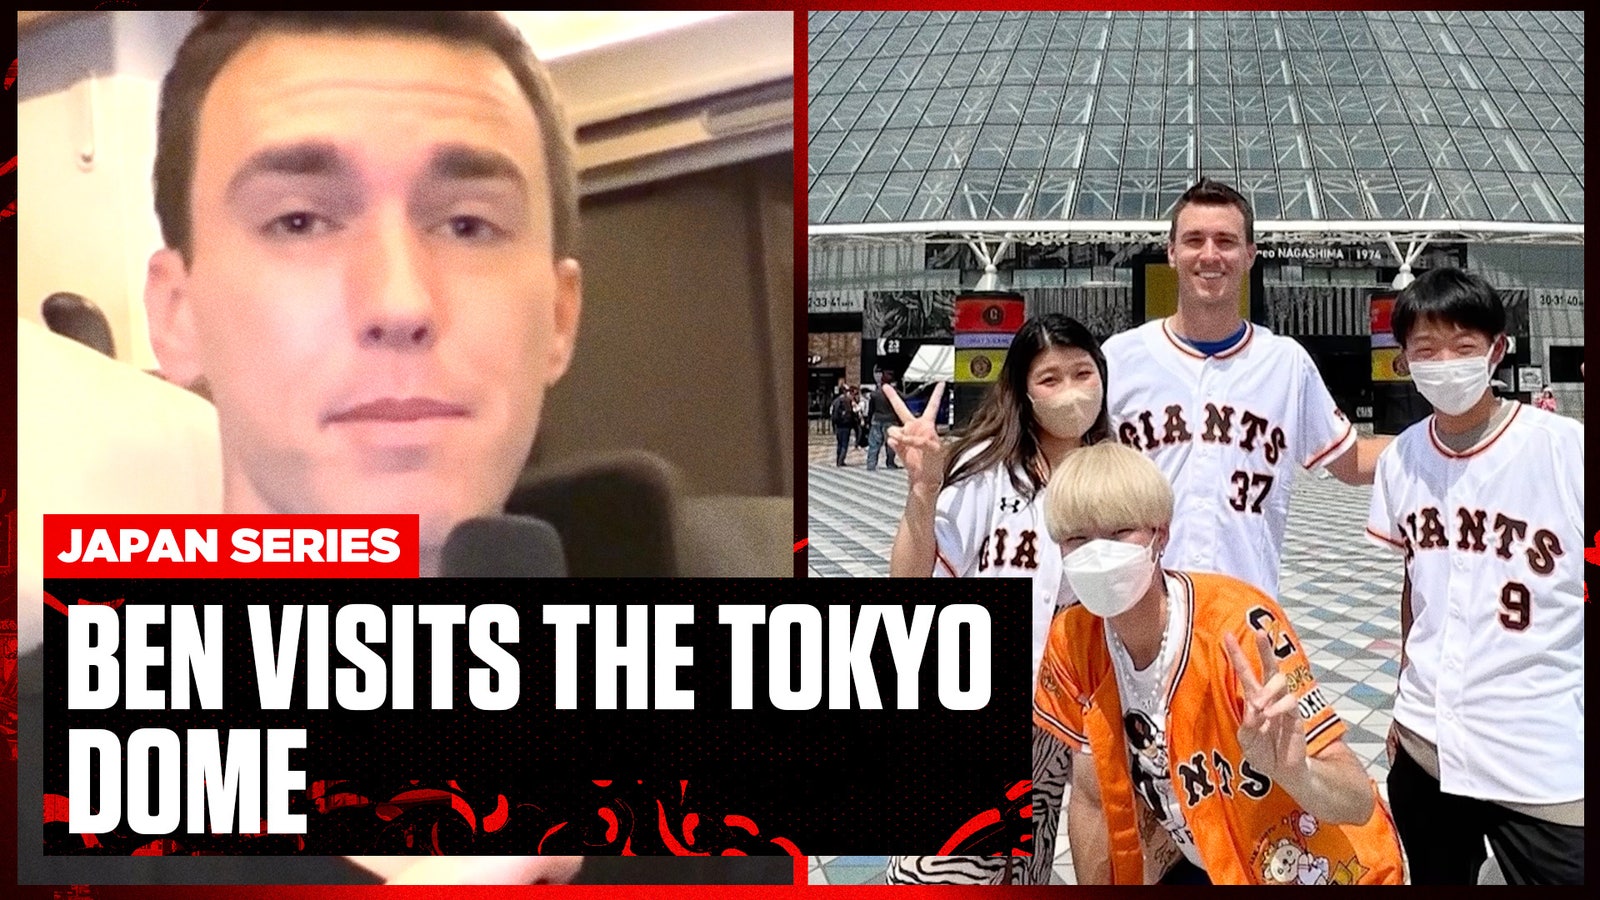 Ben Verlander goes to the Tokyo Dome